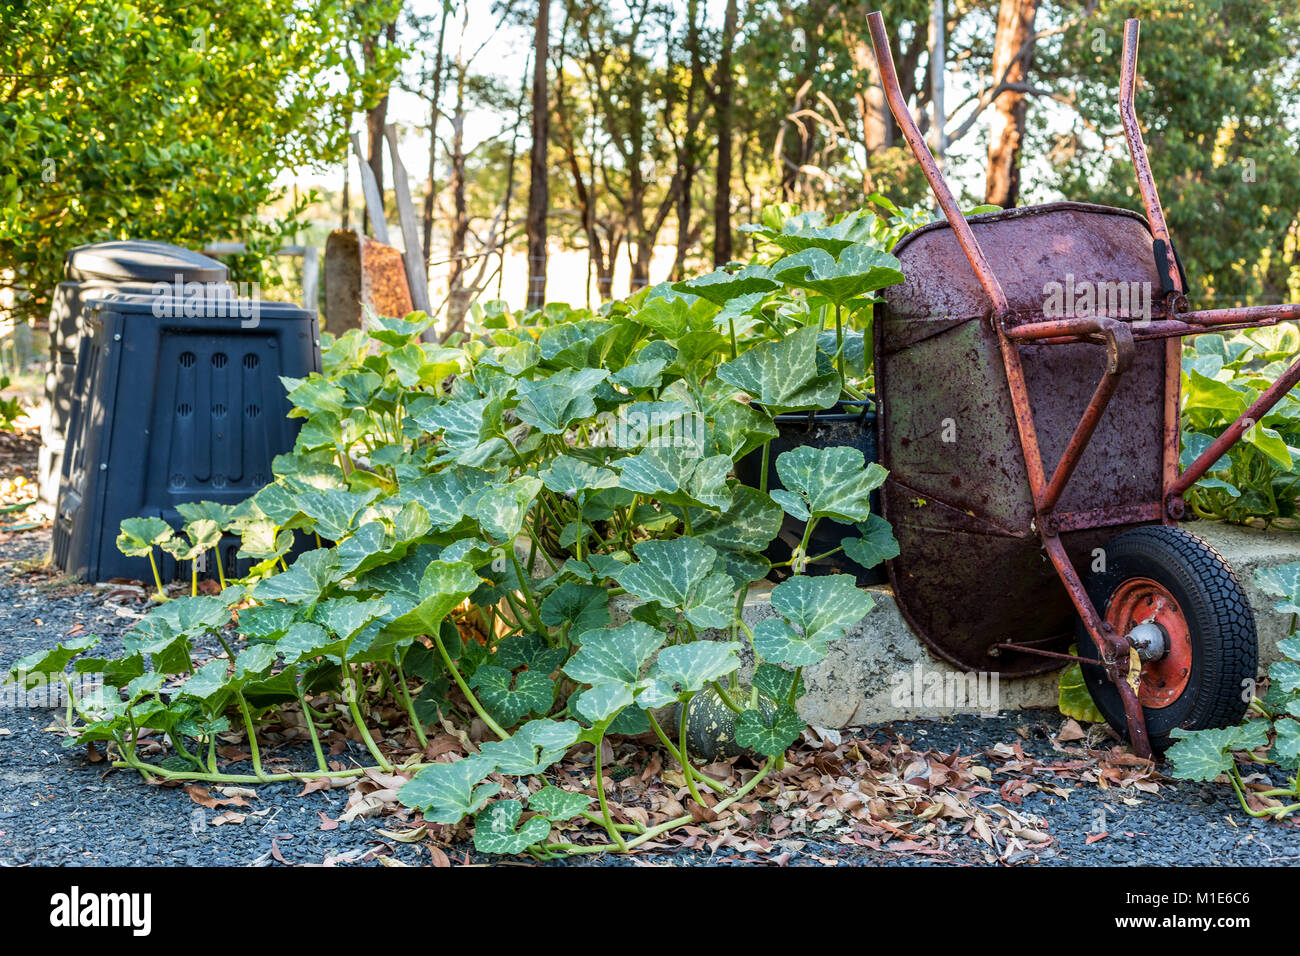 Summer vegetable garden with wheelbarrow and compost bins Stock Photo